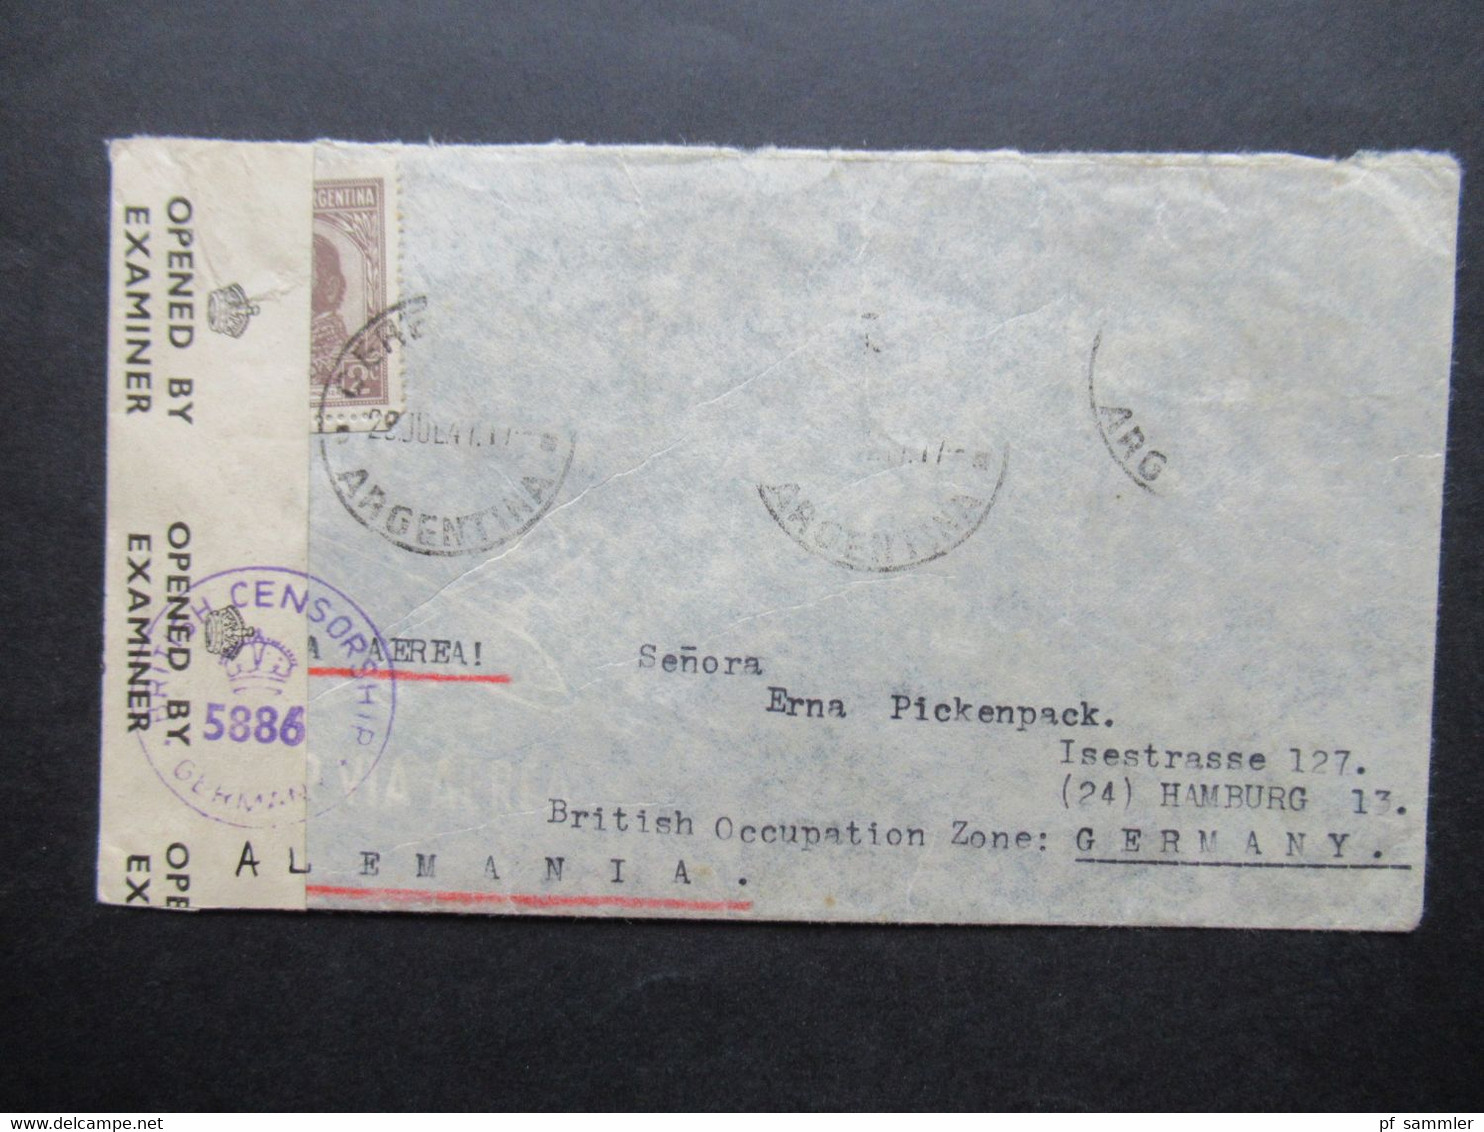 Argentinien 1947 Zensurbeleg An Frau Pickenpack In Hamburg Opened By Examiner 1172 Und British Censorship Germany - Storia Postale